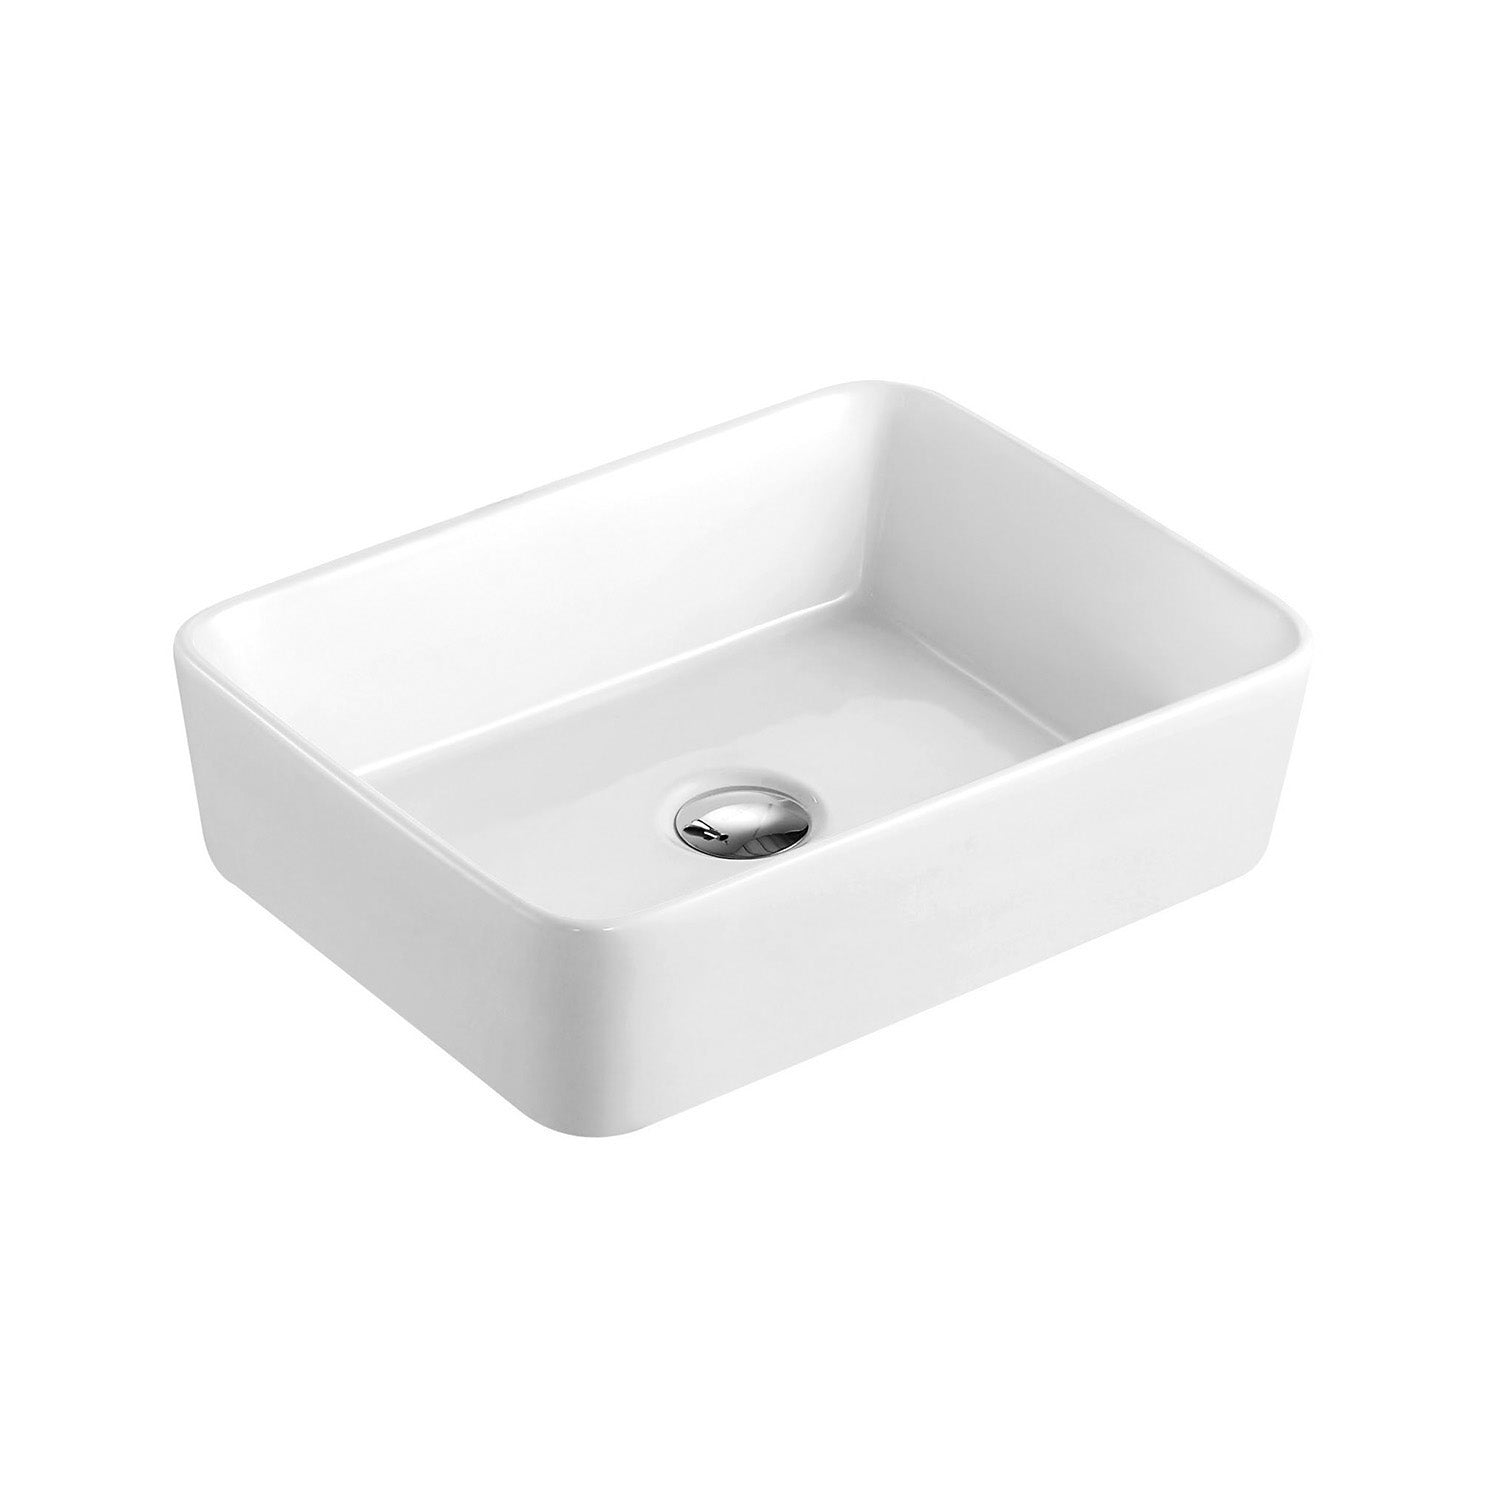 DAX Ceramic Rectangle Single Bowl Bathroom Vessel Sink, White Finish, 19 x 14-1/2 x 5 Inches (BSN-285B)